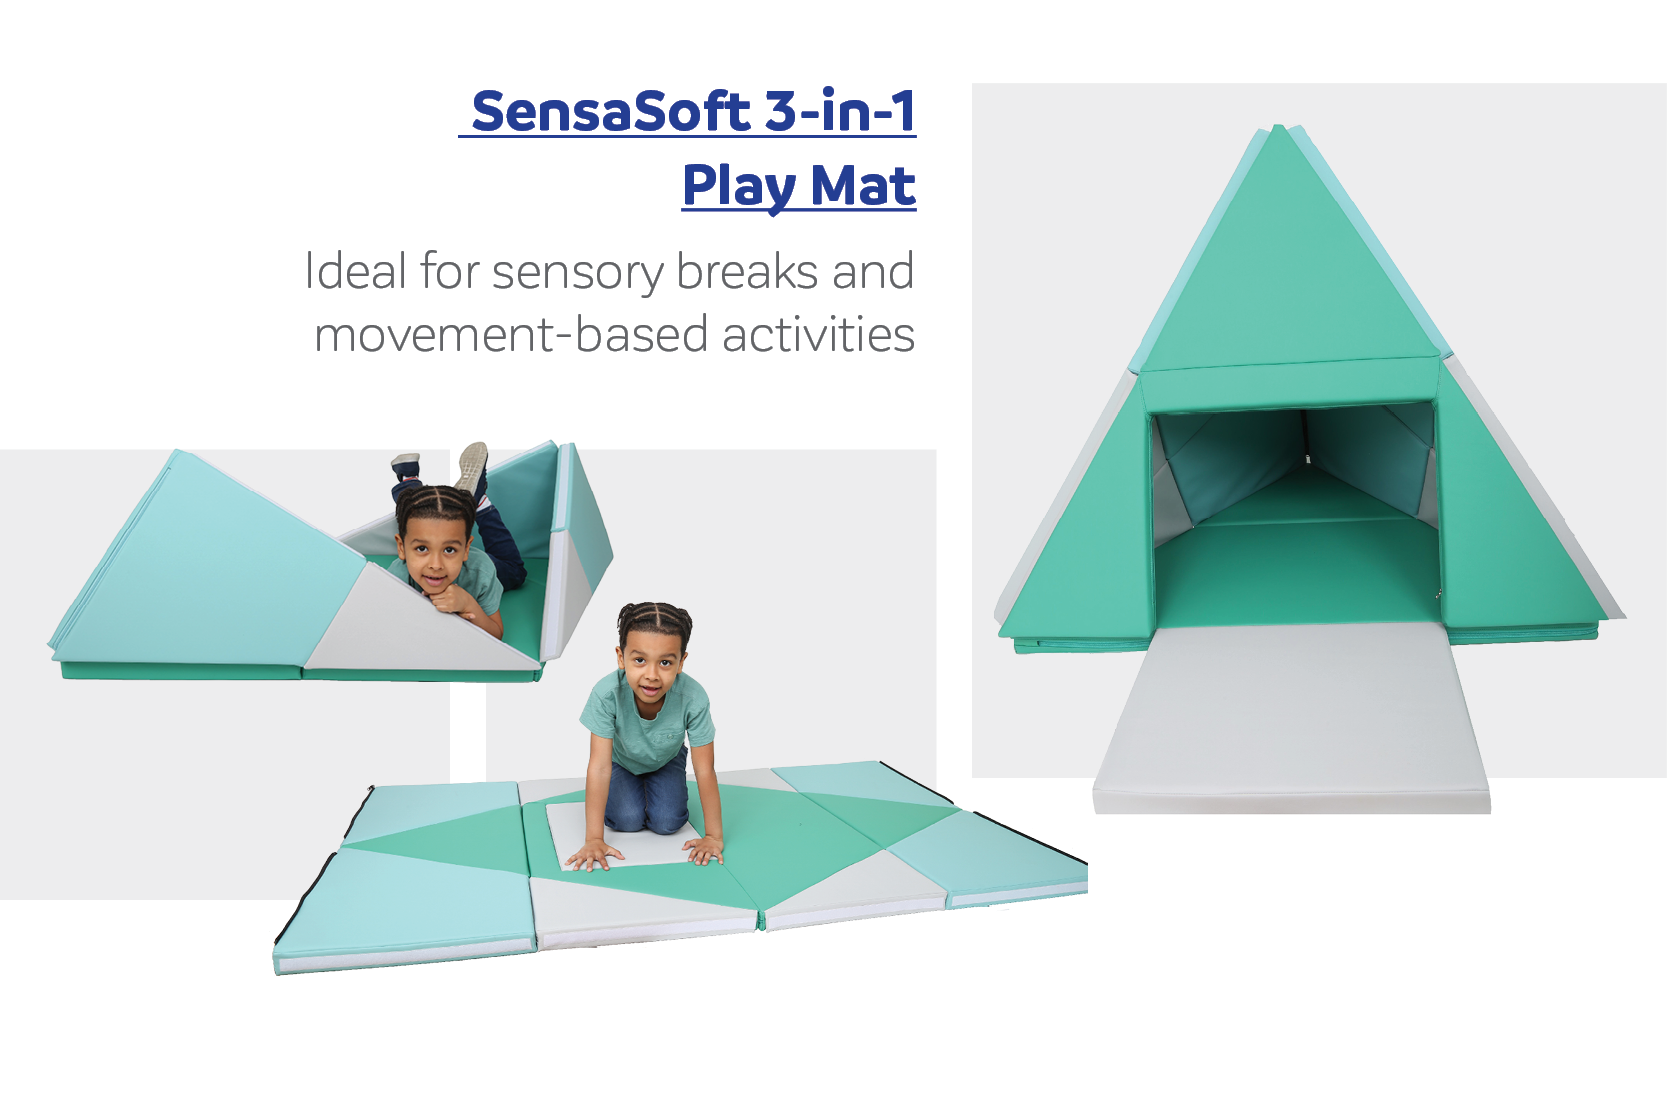 SensaSoft 3-in-1 Play Mat